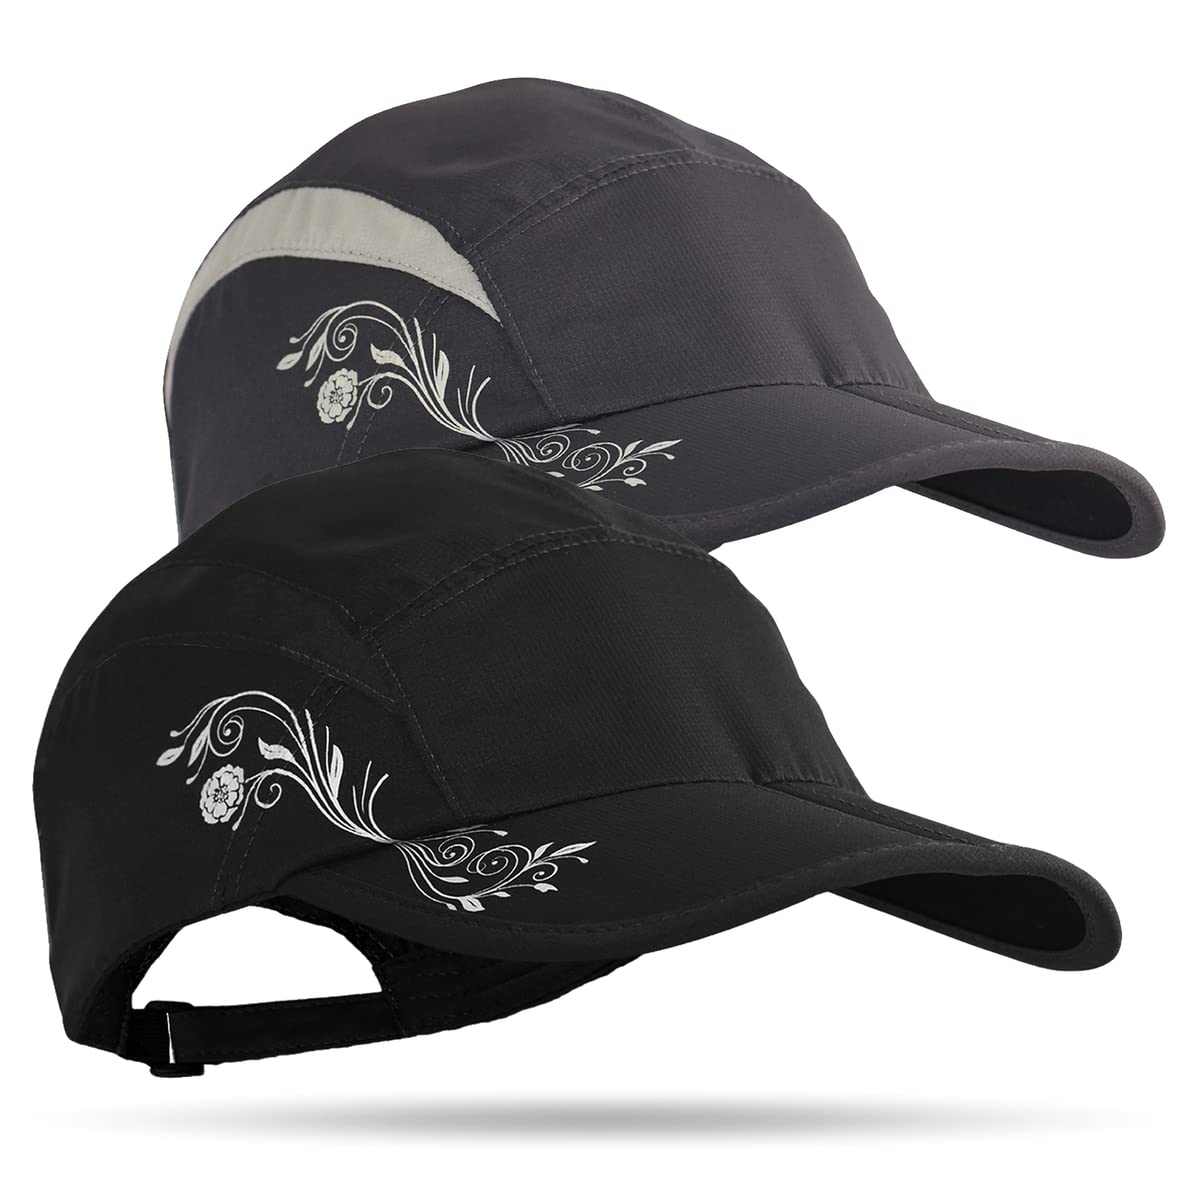 TrailHeads Folding Bill Running Hat for Women Summer Cap with UV Protection Black Print Grey Print